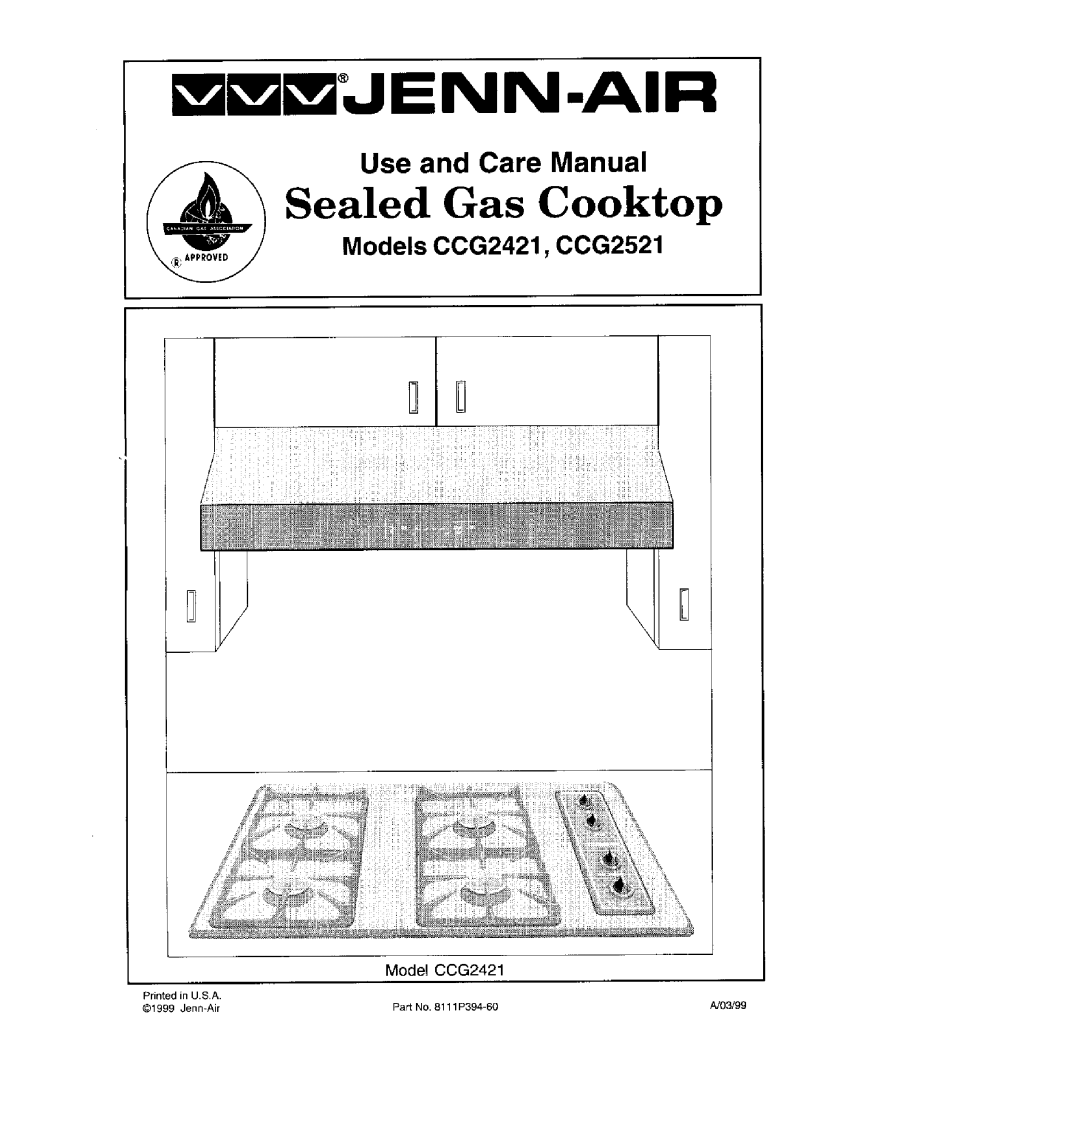 Jenn-Air manual Models CCG2421, CCG2521, Nn-Air, Sealed Gas Cooktop, Use and Care Manual, @1999 Jenn-Air, AJ03/99 